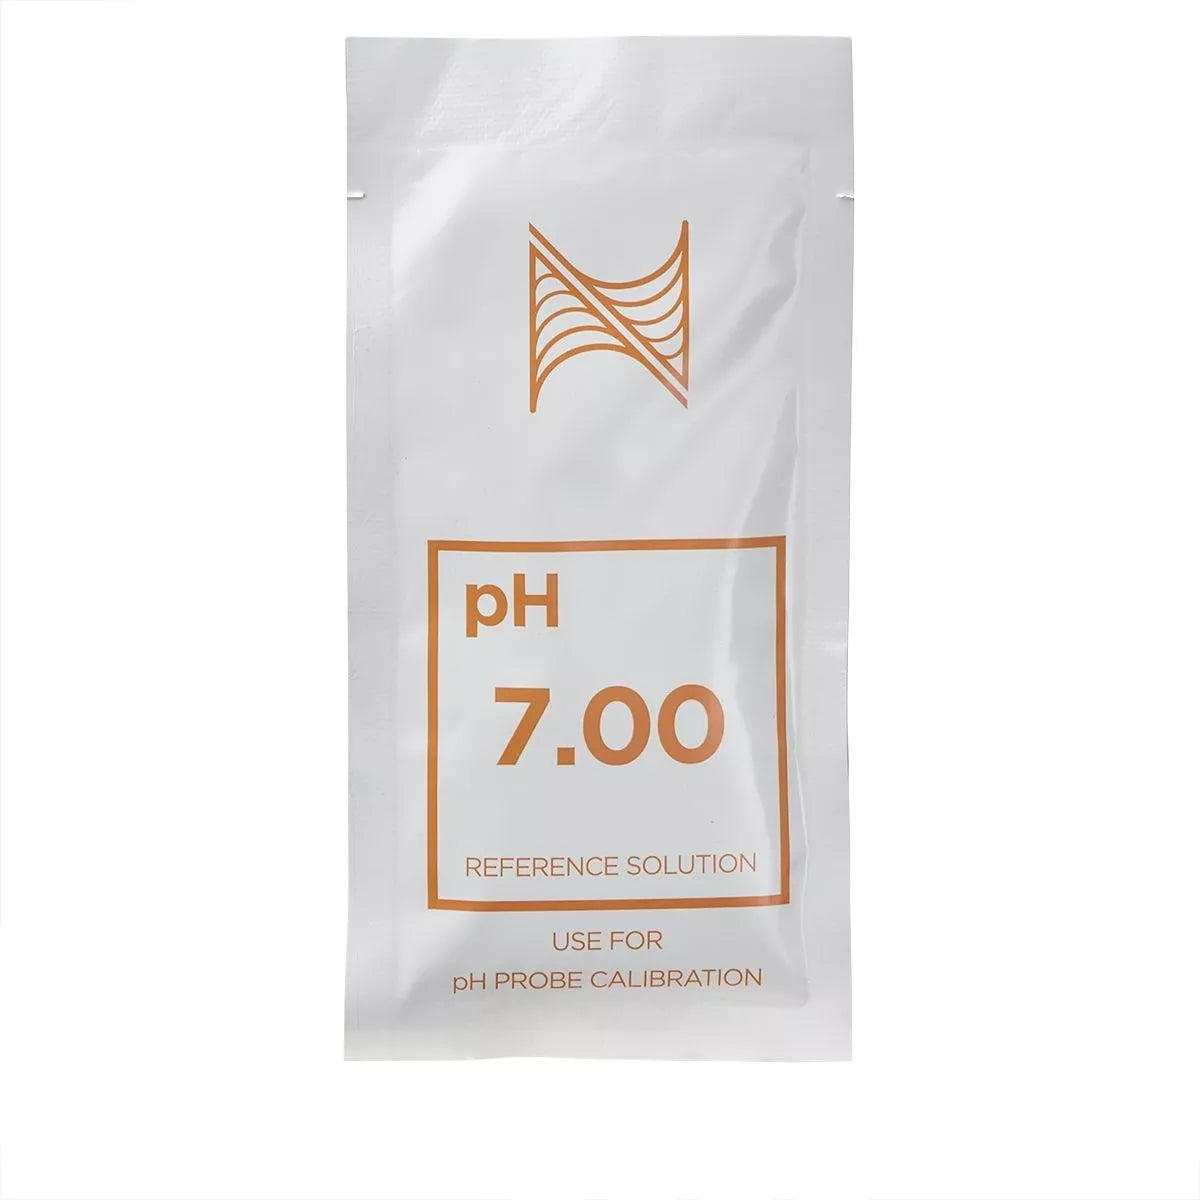 pH 7.00 calibration fluid